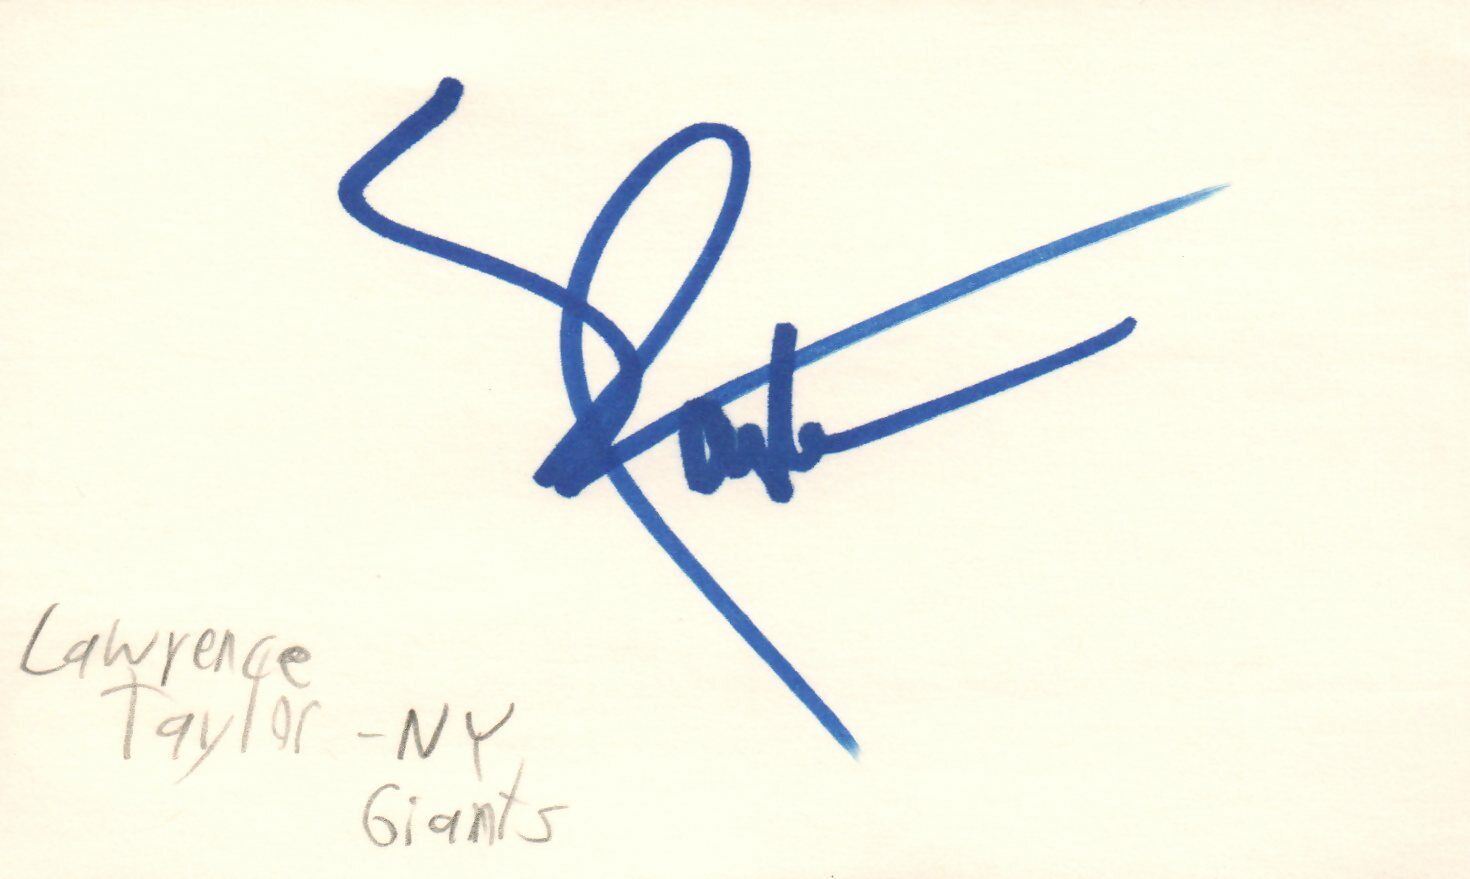 Lawrence Taylor NY Giants NFL Football HOF Autographed Signed Index Card JSA COA